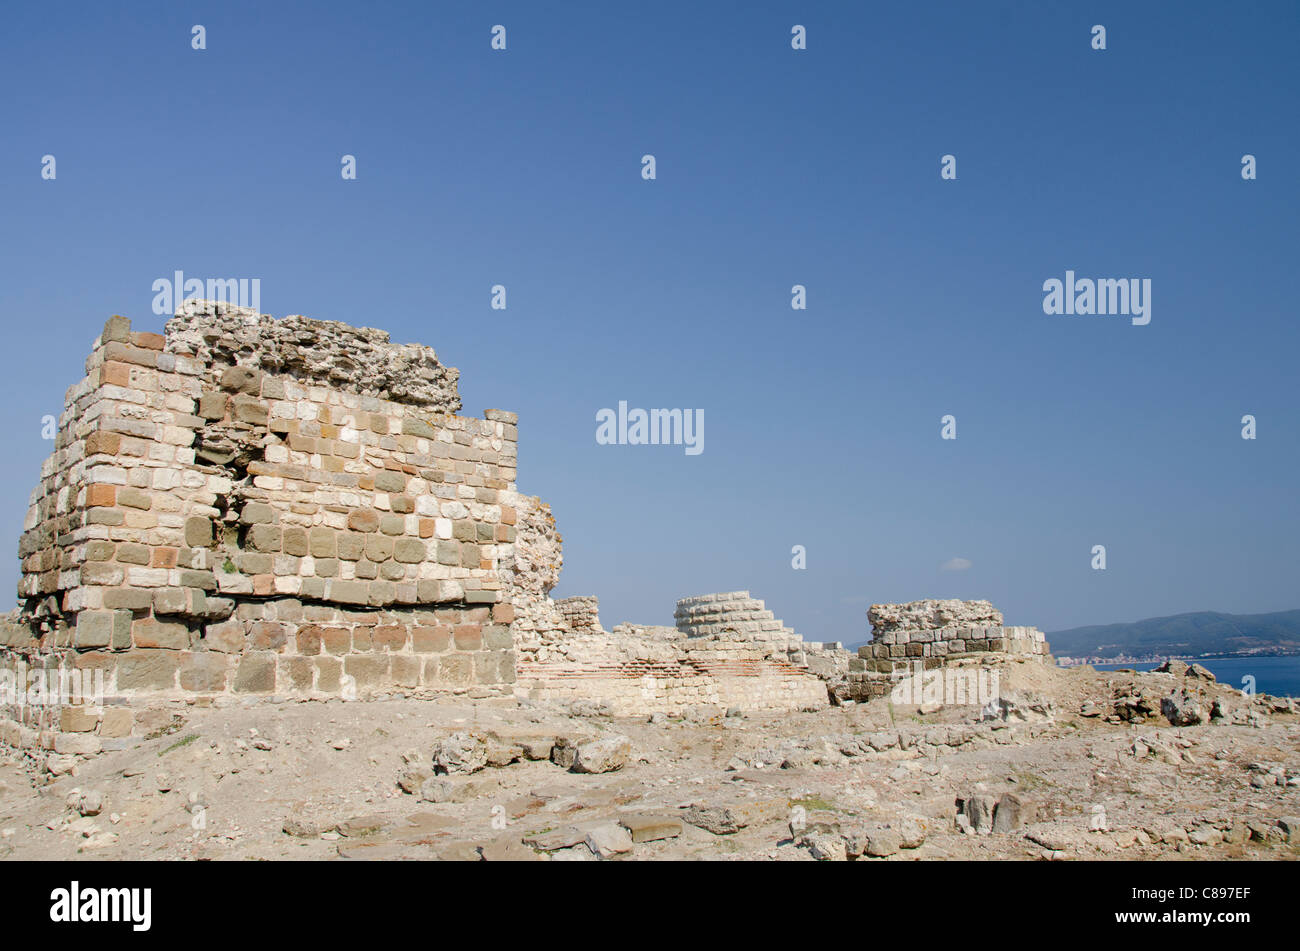 Bulgaria, Nessebur (aka Nessebar or Nesebar). Waterfront Greek Rampart ruins of the old city wall. UNESCO World Heritage City. Stock Photo